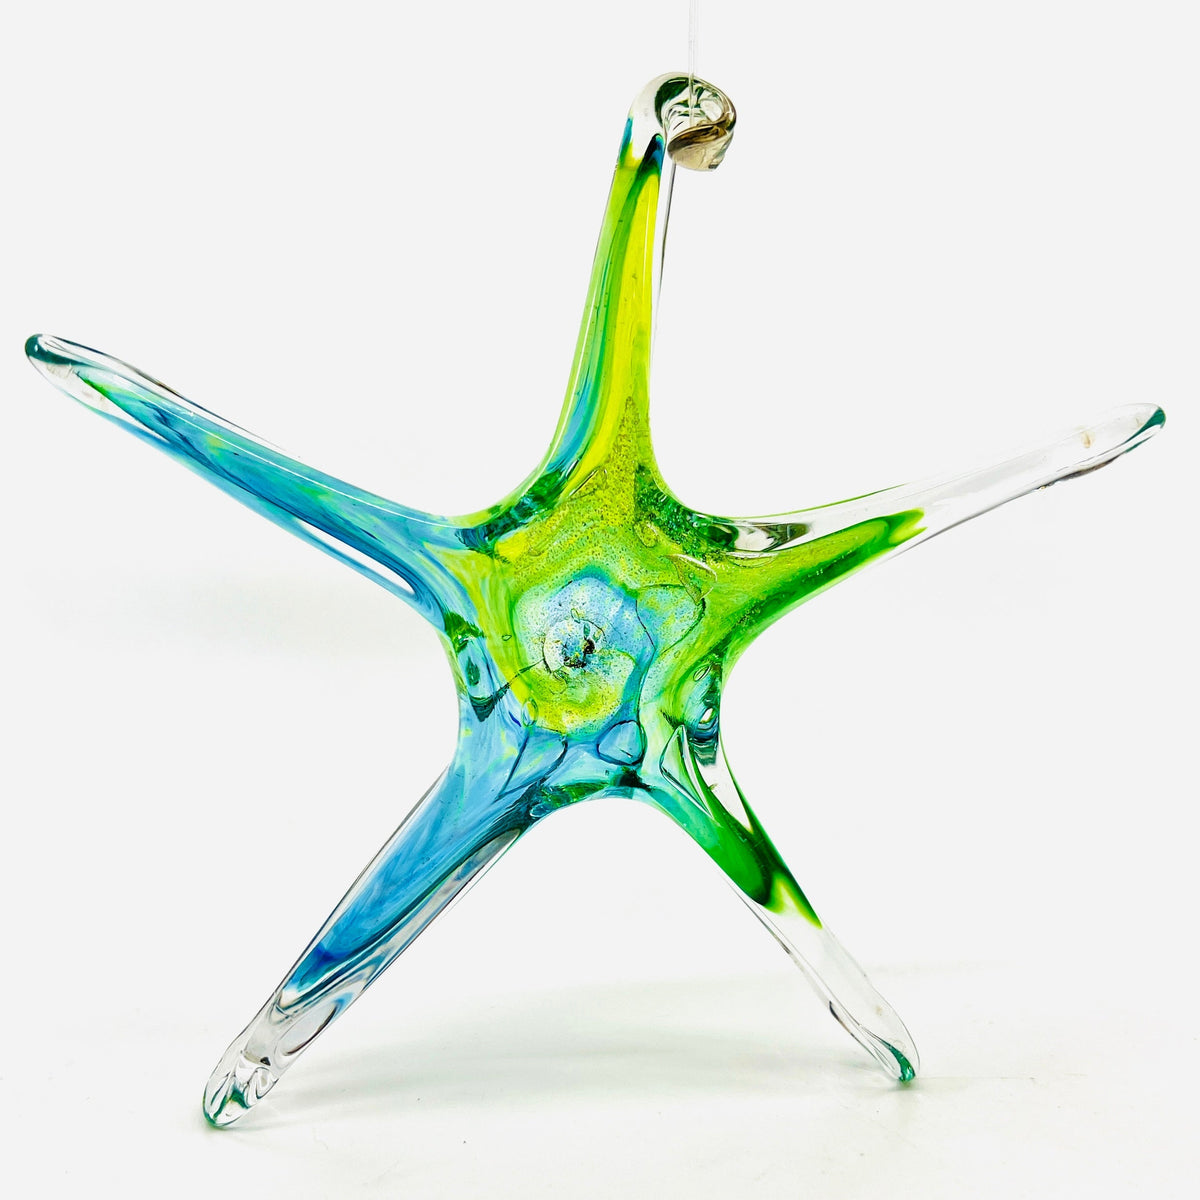 Recycled Glass Magnets - Luke Adams Glass Blowing Studio